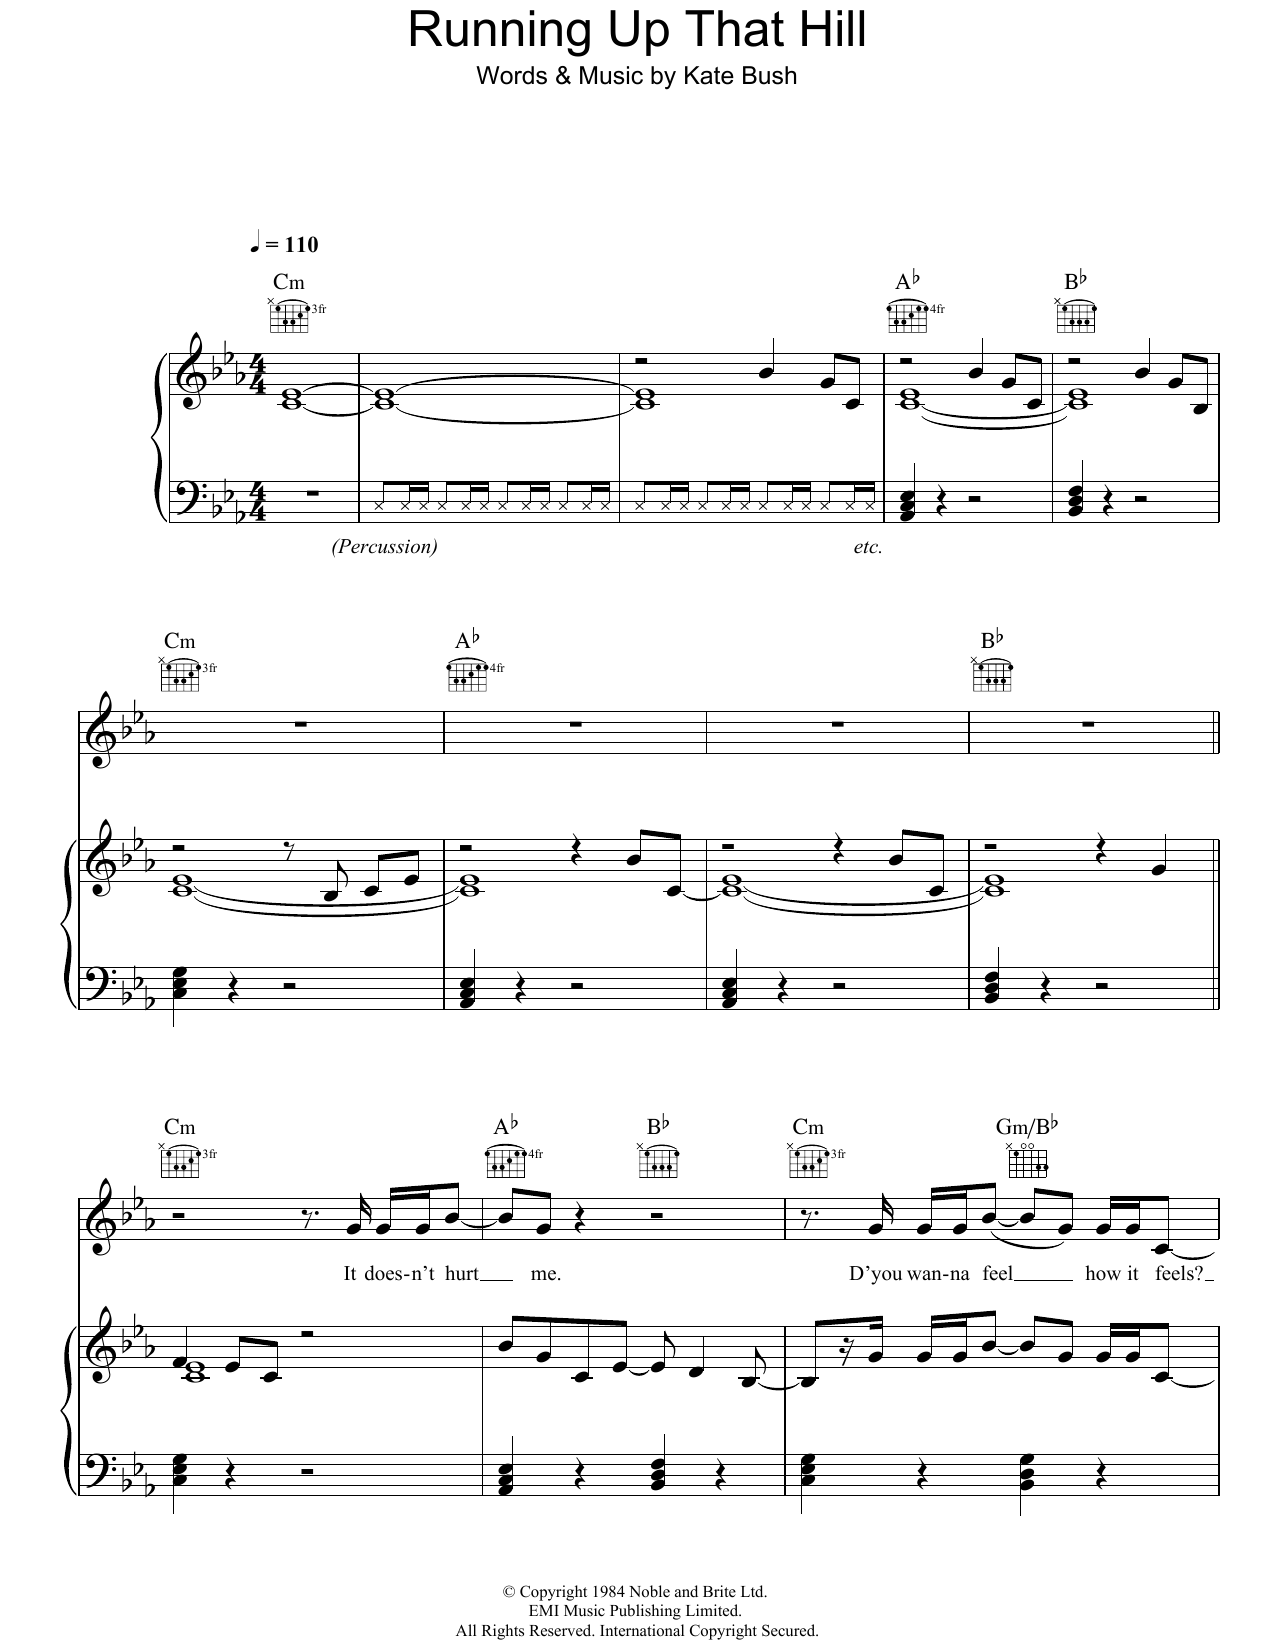 Kate Bush Running Up That Hill Sheet Music Notes & Chords for Ukulele - Download or Print PDF